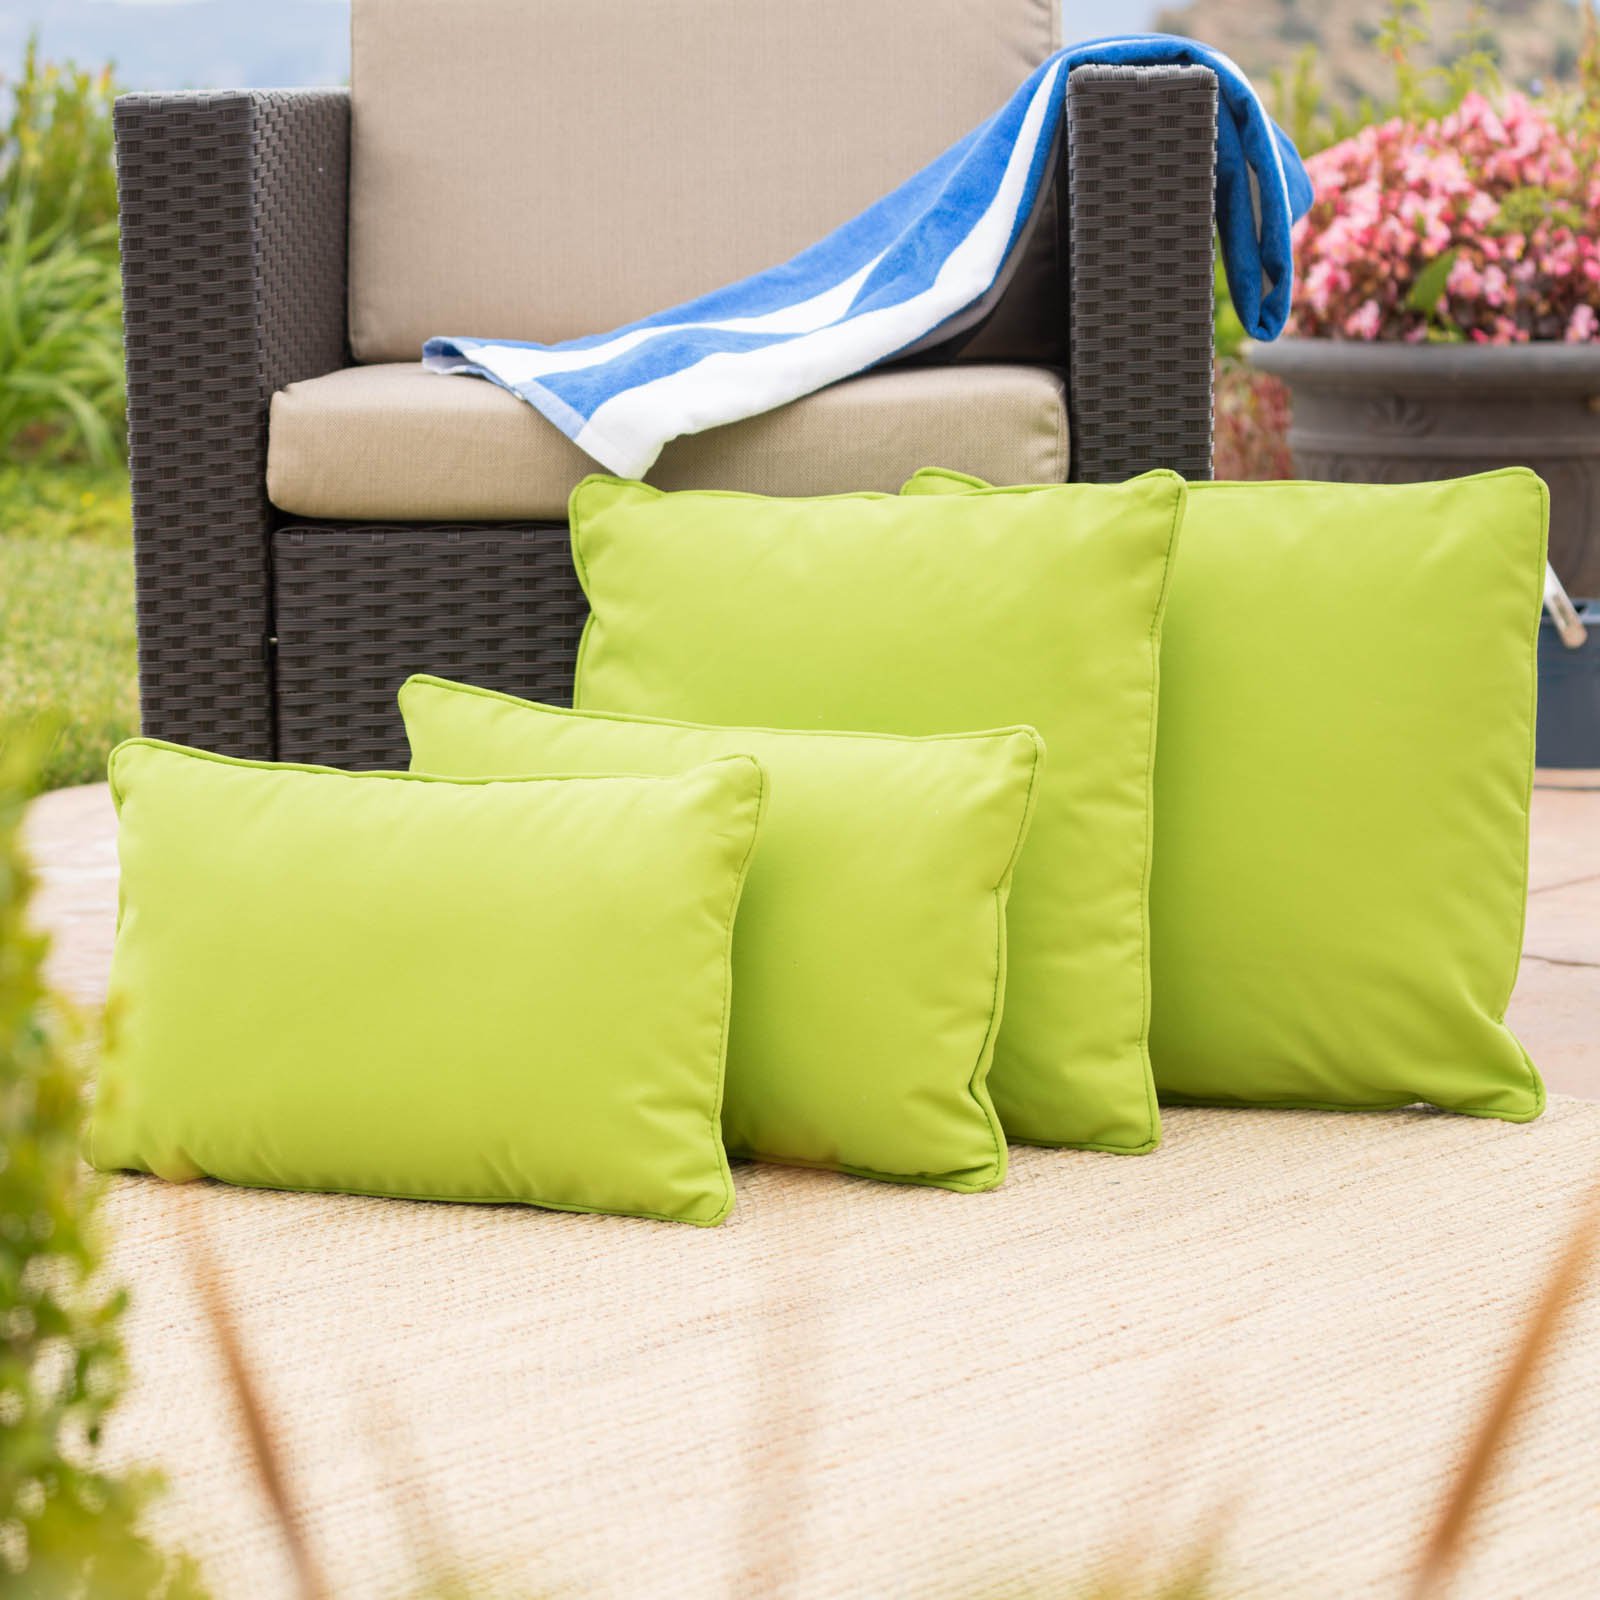 Coronado Outdoor Water Resistant Pillows - Set of 4 - Walmart.com